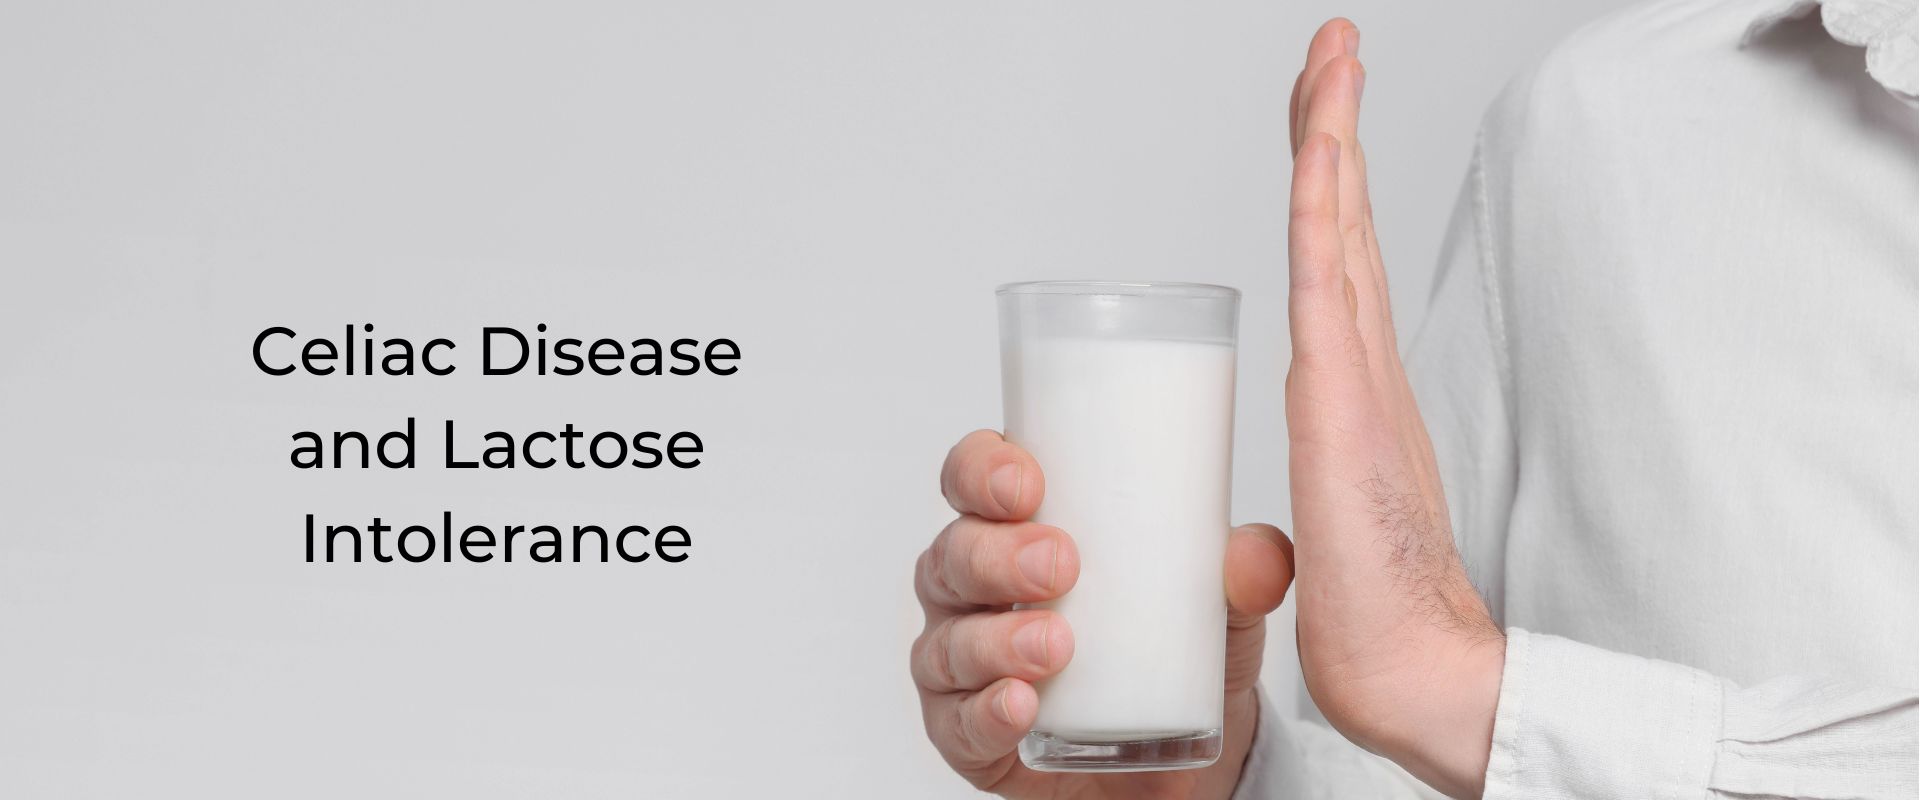 Celiac Disease and Lactose Intolerance edited